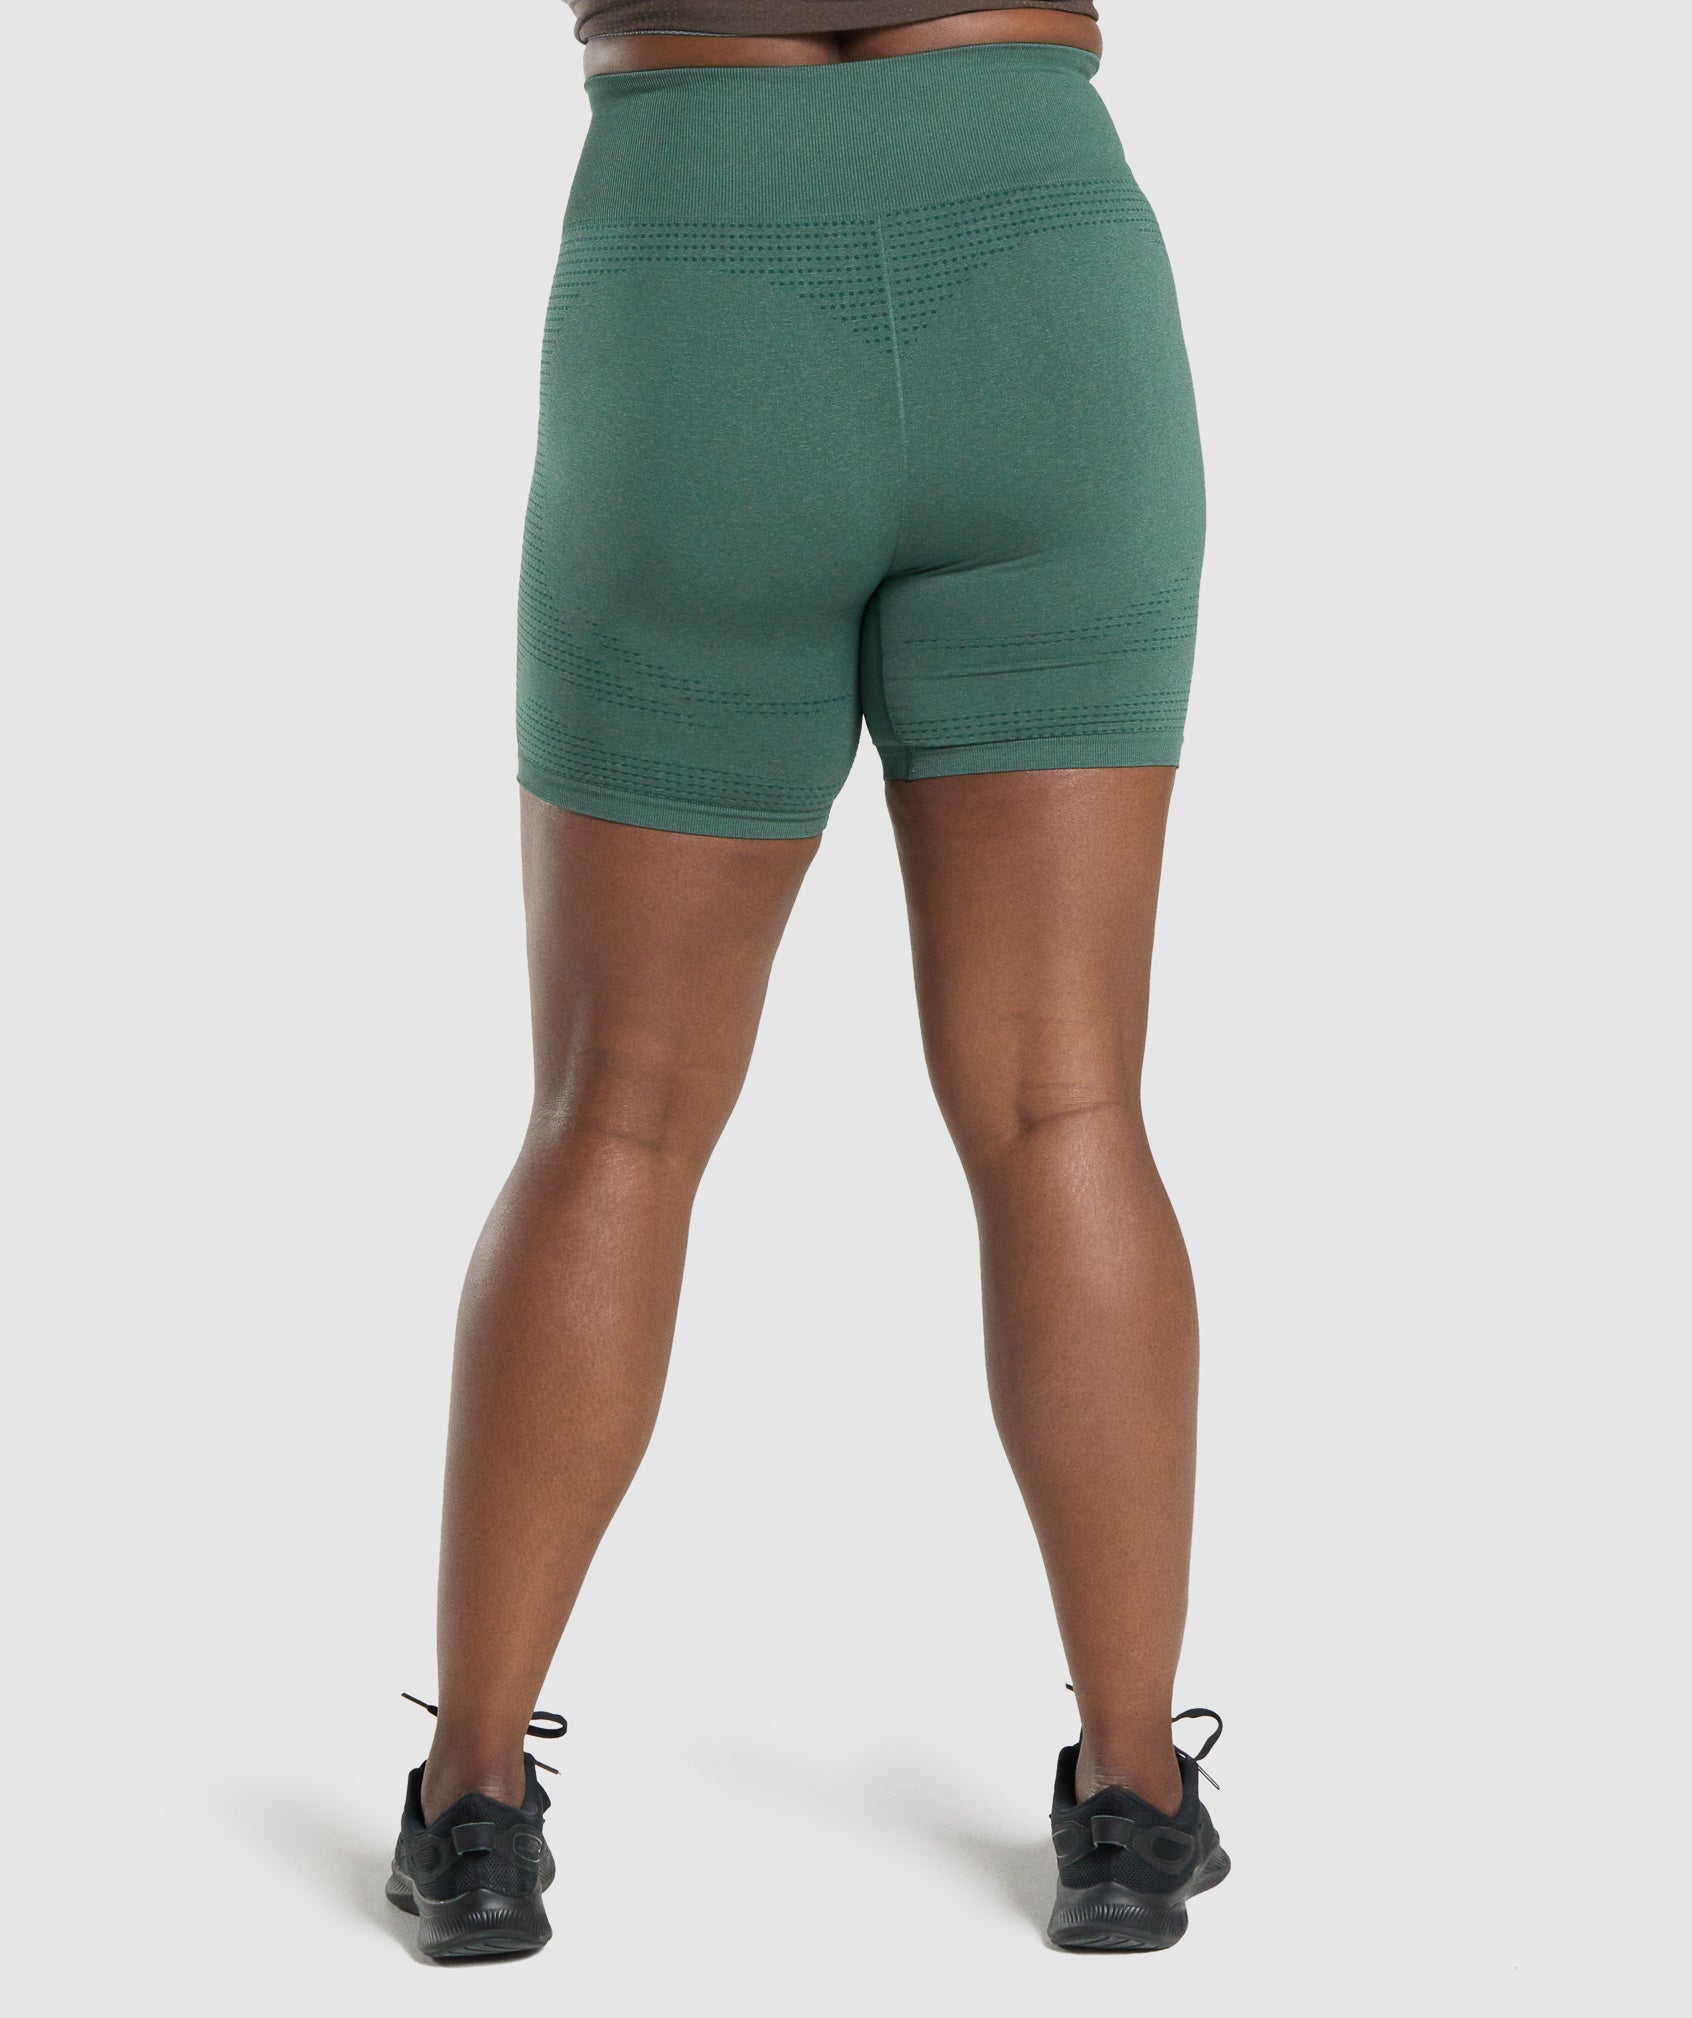 Vital Seamless 2.0 Shorts in Dark Green Marl - view 2